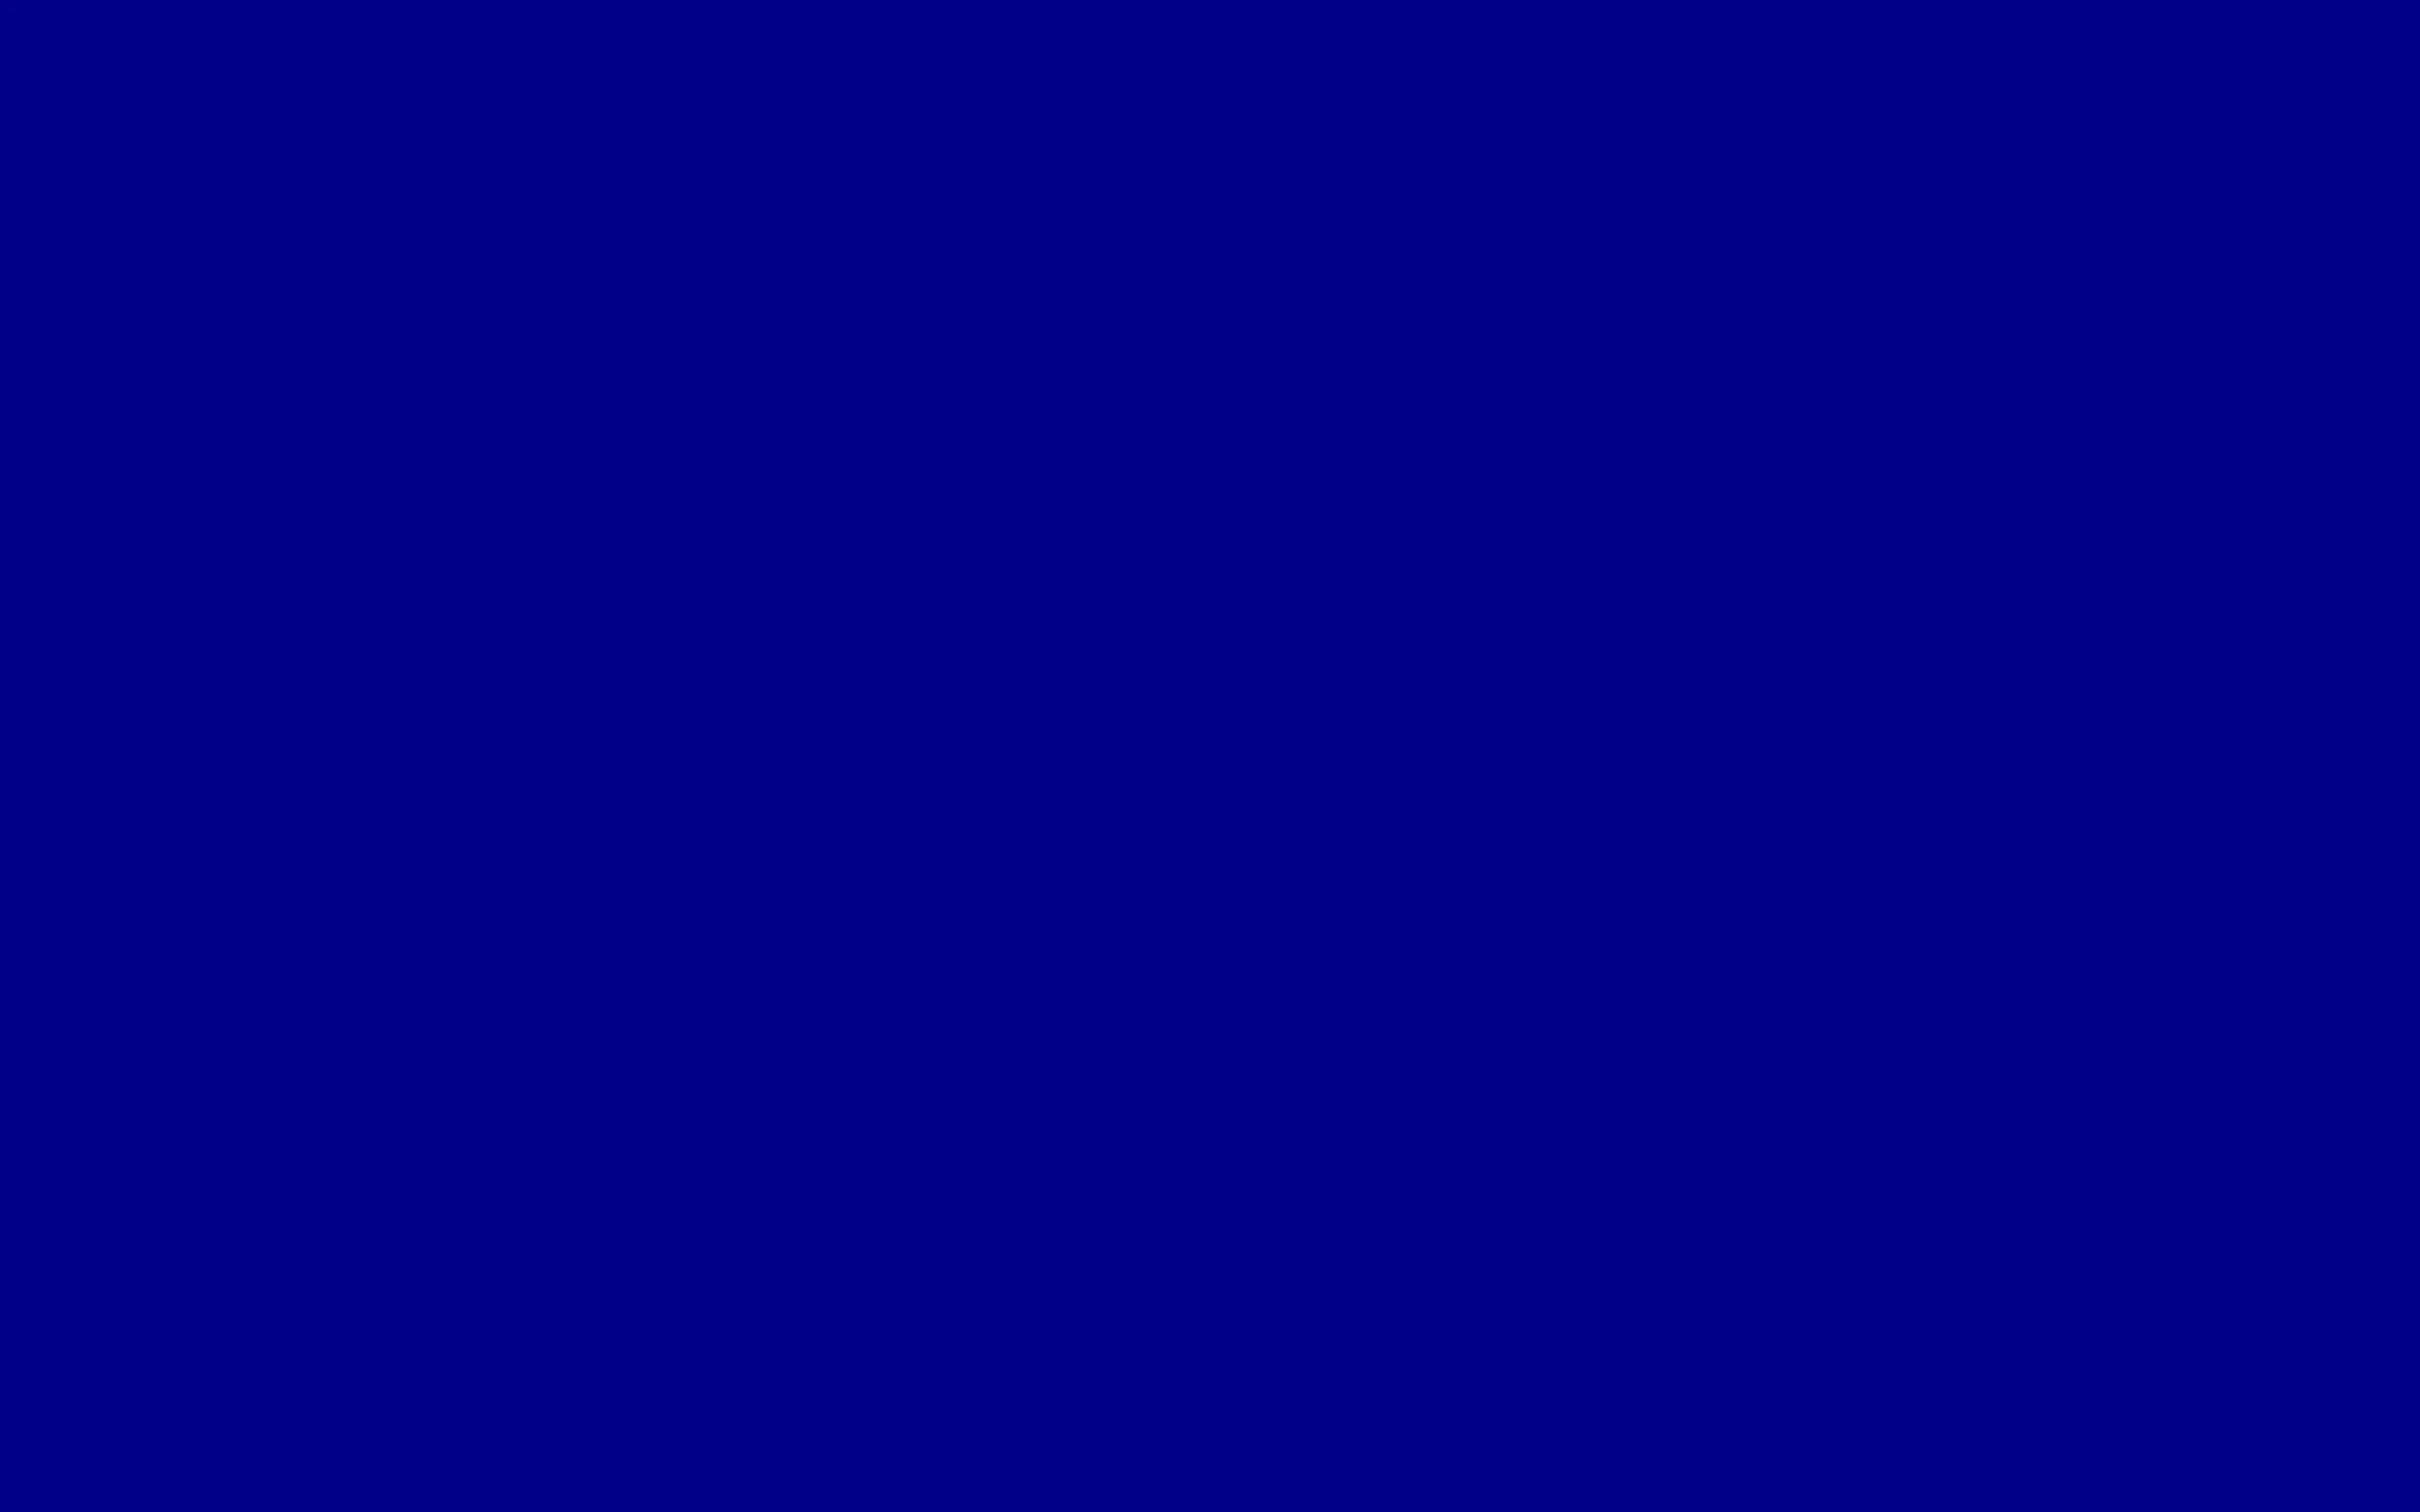 Tt true persistent id. Темно синий цвет фон. Образец цвета синий. 7fffd4 цвет. Цвет 205.